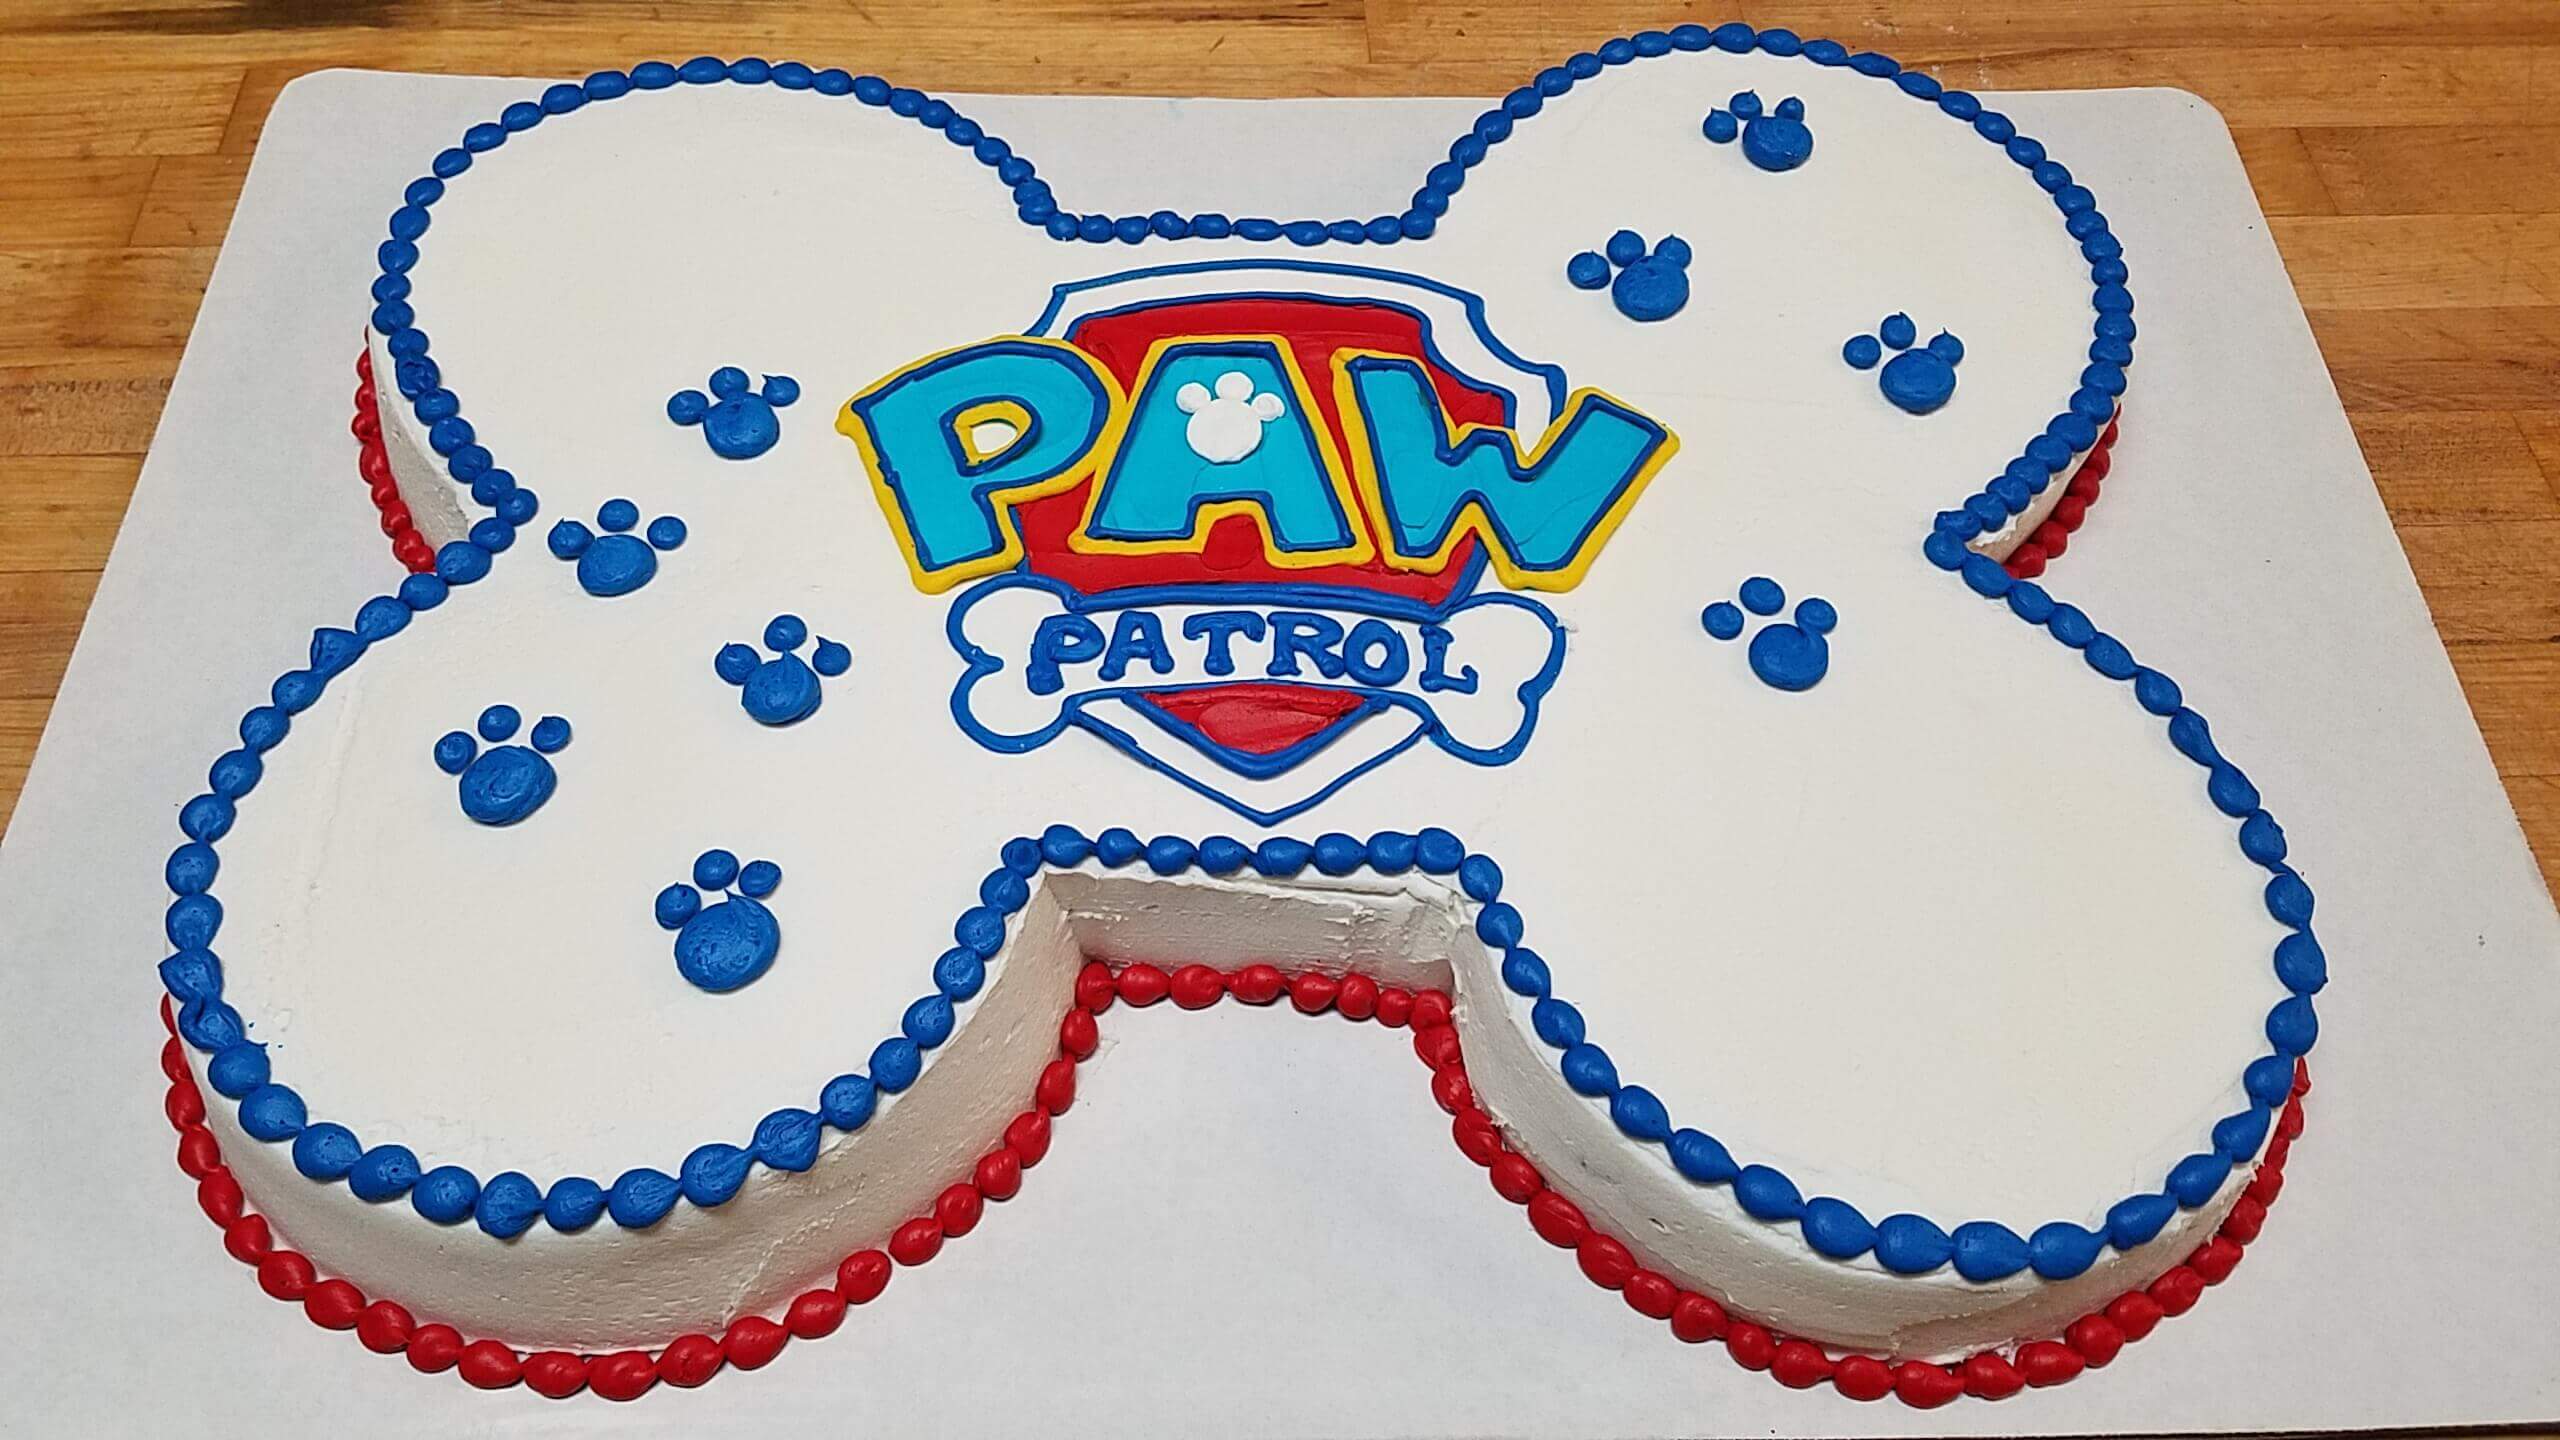 Paw patrol cake decorations -  France